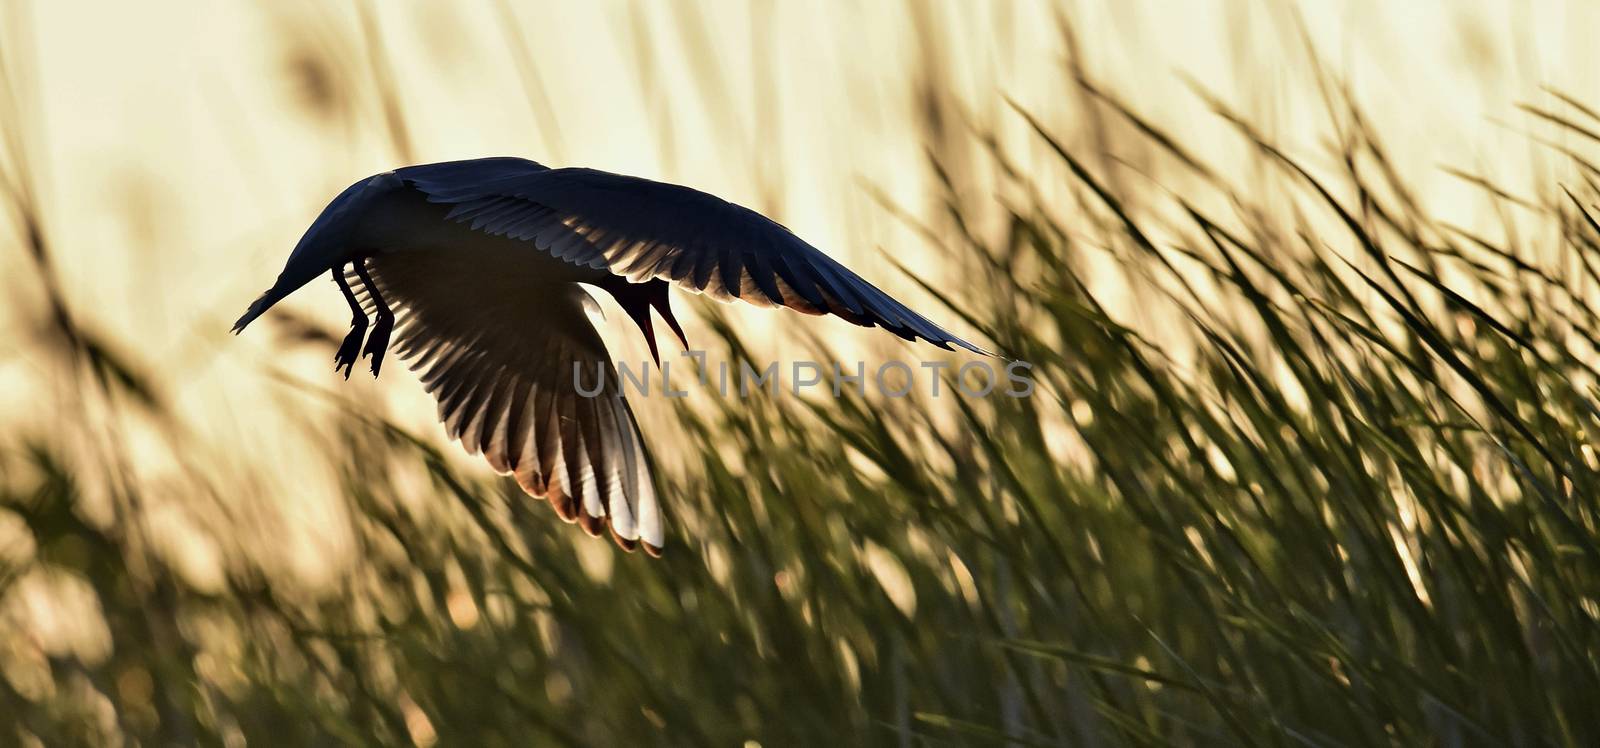 Black-headed Gull (Larus ridibundus) on sunset background by SURZ